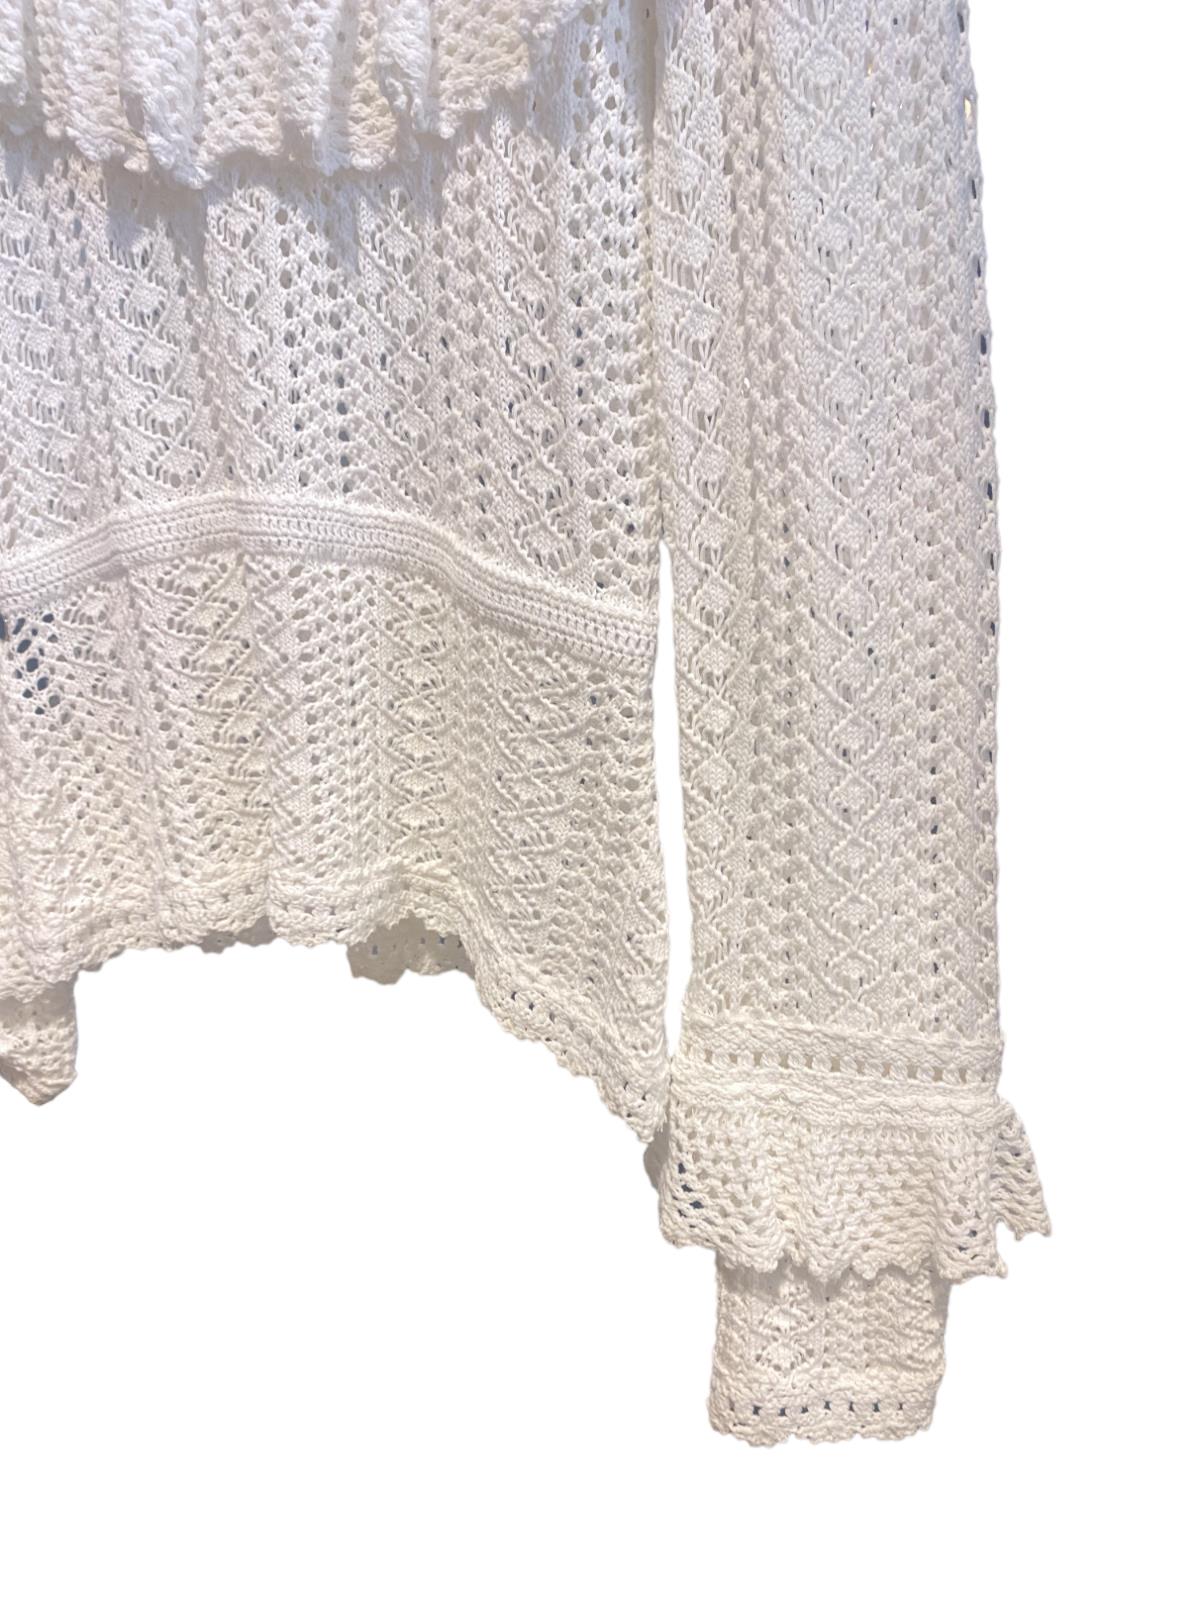 Zimmermann Jude Ruffle Top | Cream/Off-White, Fluted Sleeves, Crochet, Yoke Neck